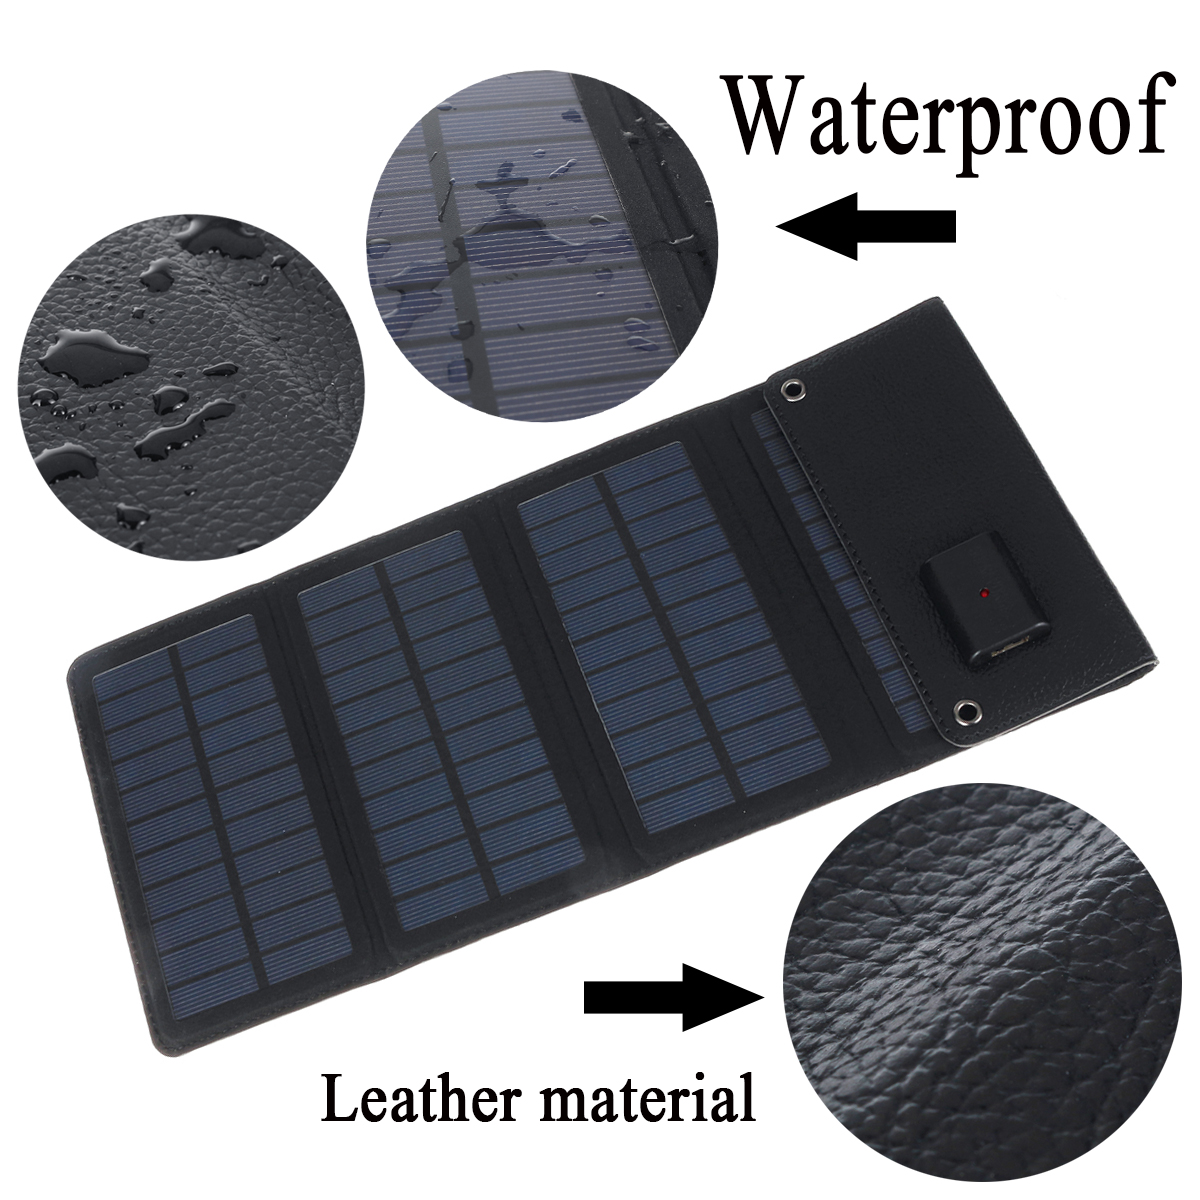 7W 5V Waterproof Foldable Mono-crystalline Silicon Solar Panel With LED Charging indicator & USB Interface 13